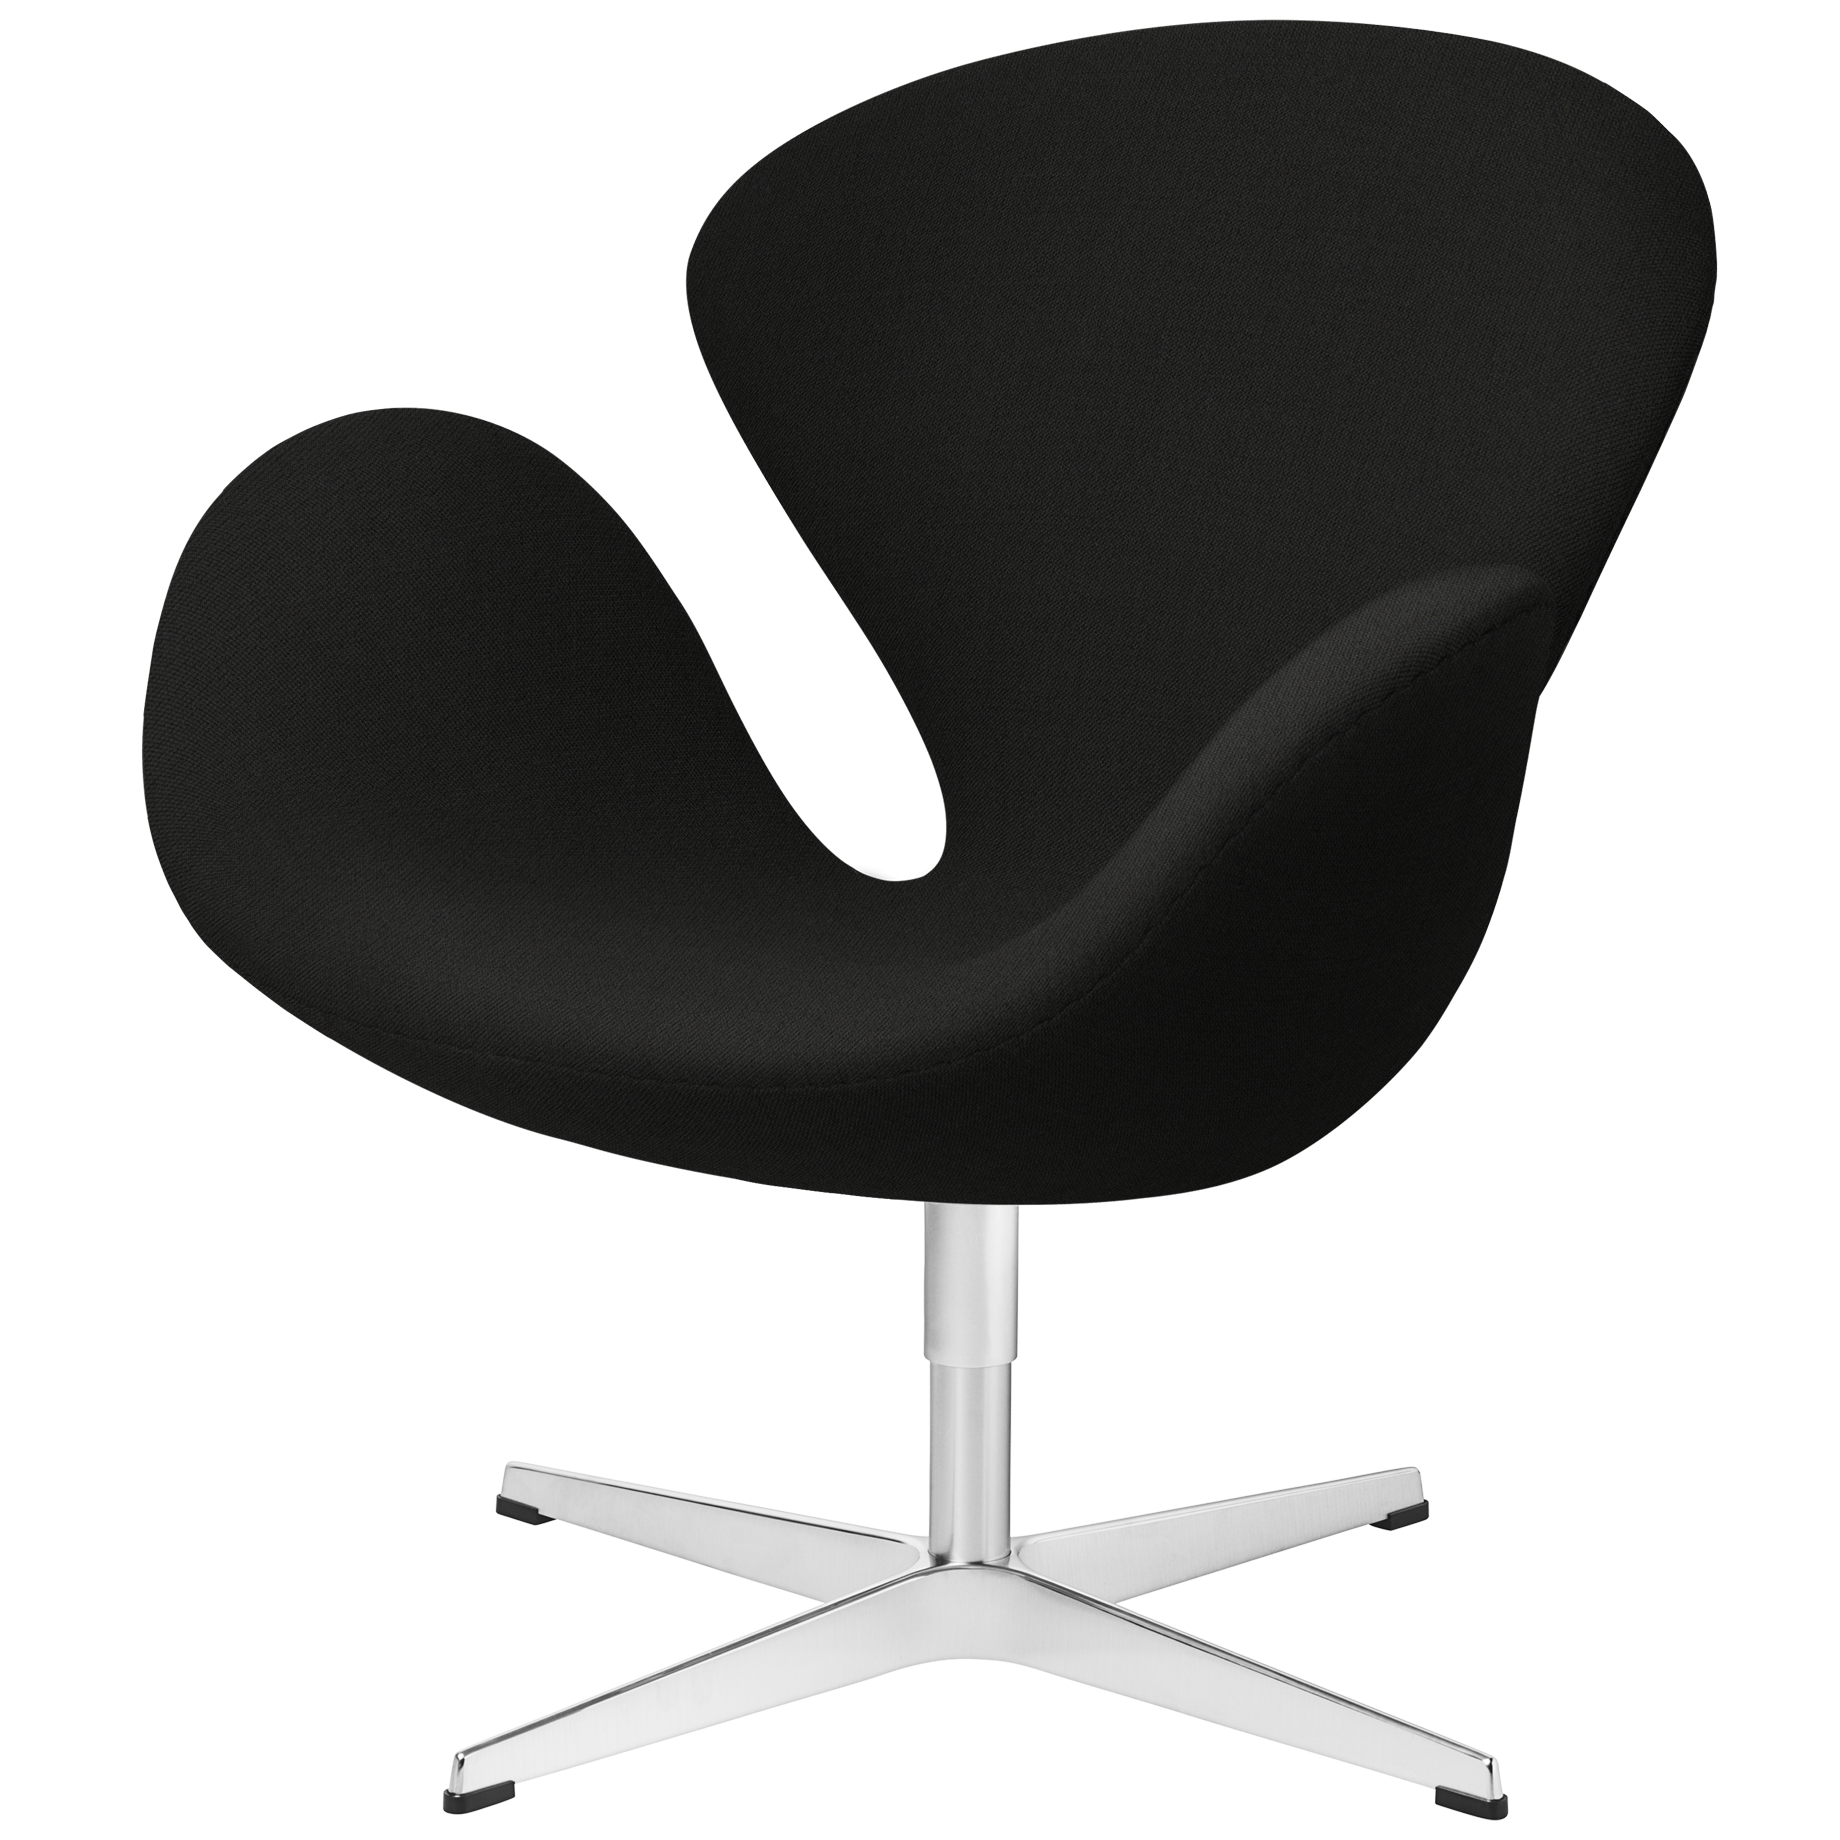 The Swan easy chair Fritz Hansen